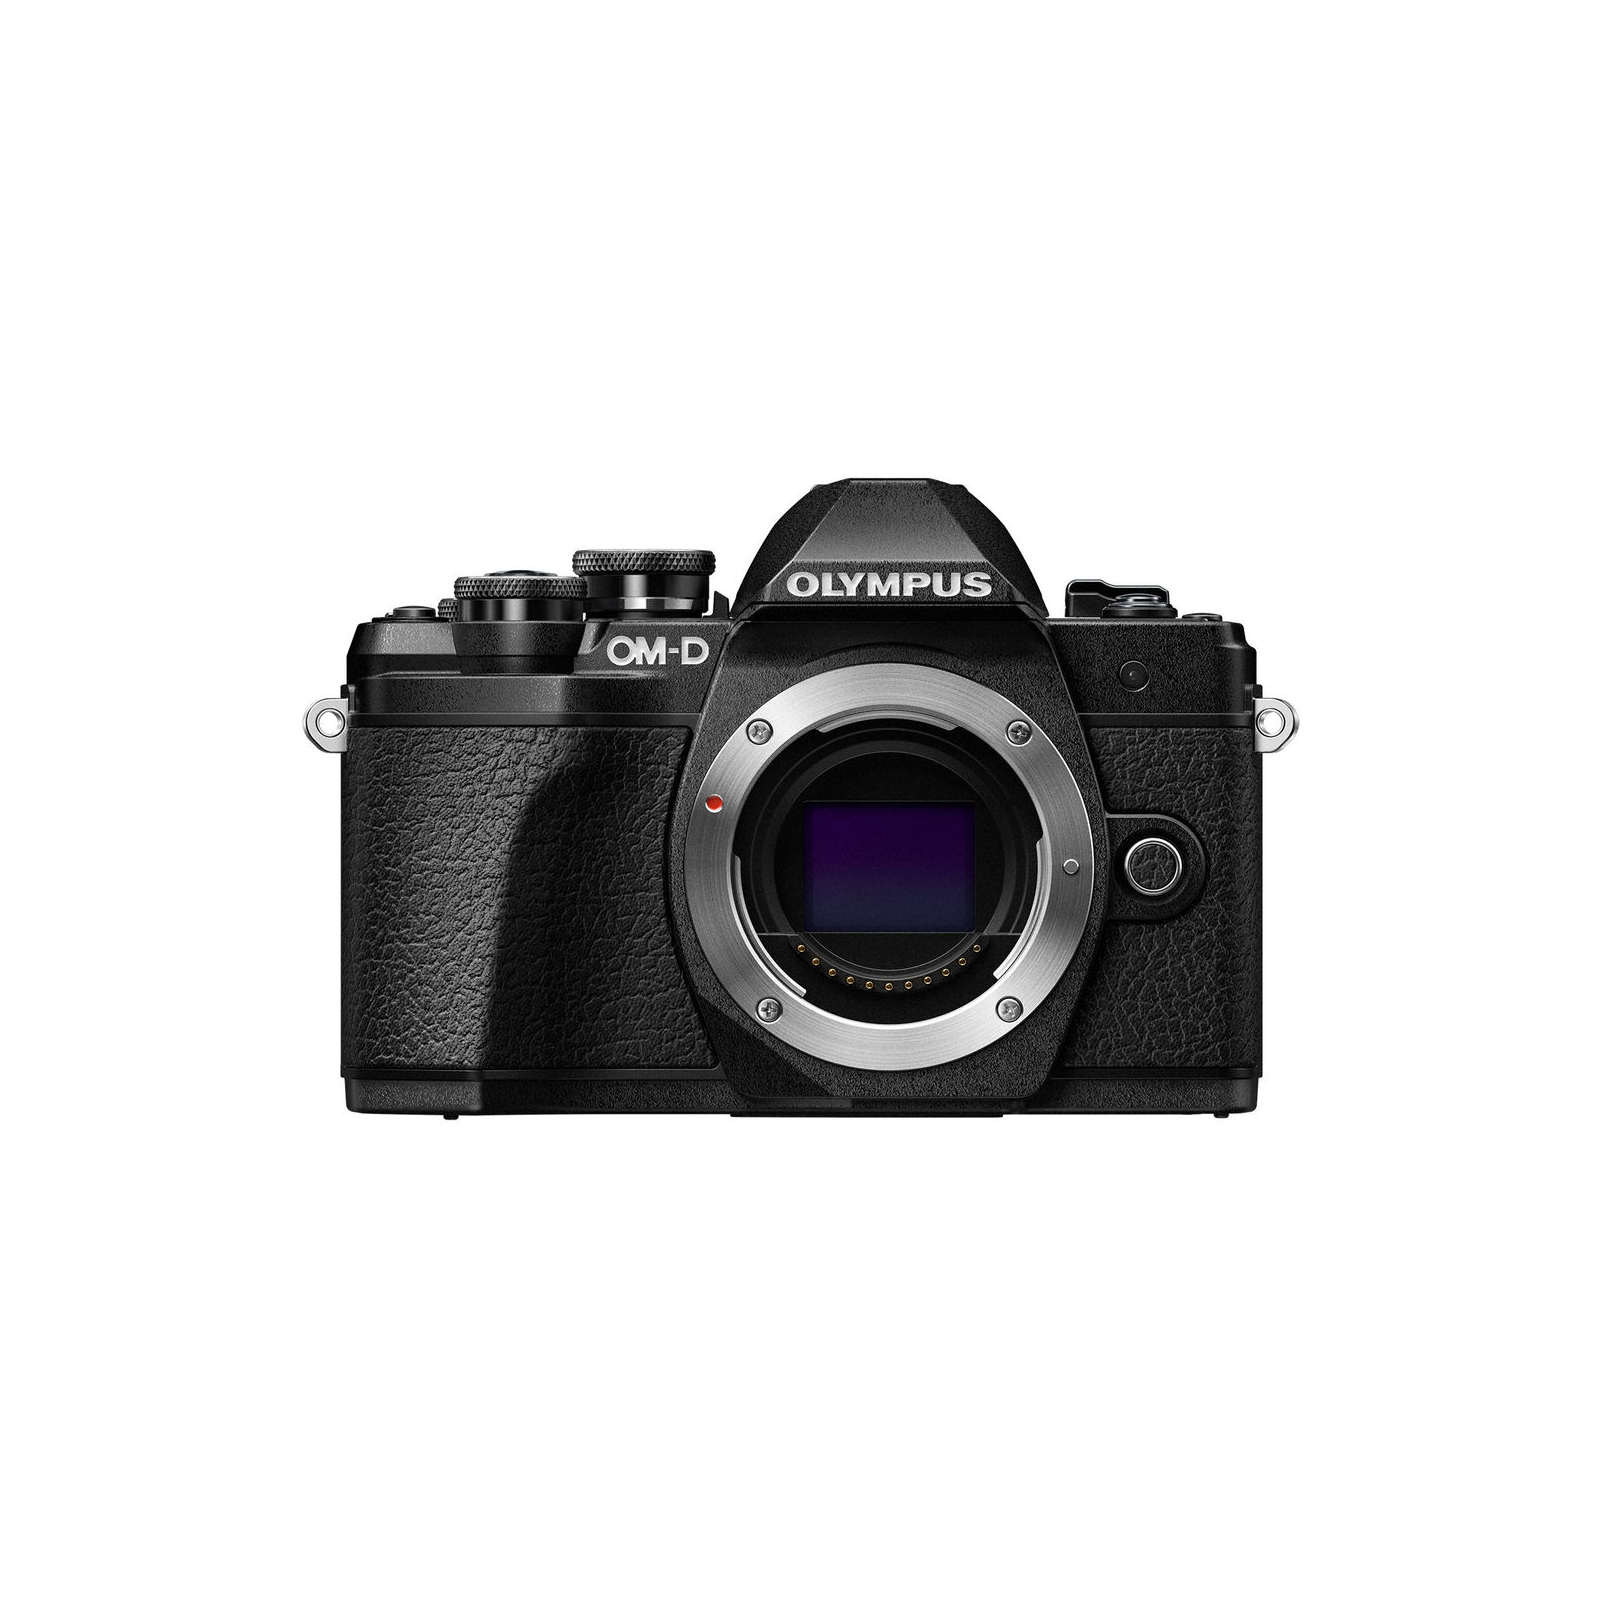 Цифровой фотоаппарат Olympus E-M10 mark III Body black (V207070BE000) изображение 2